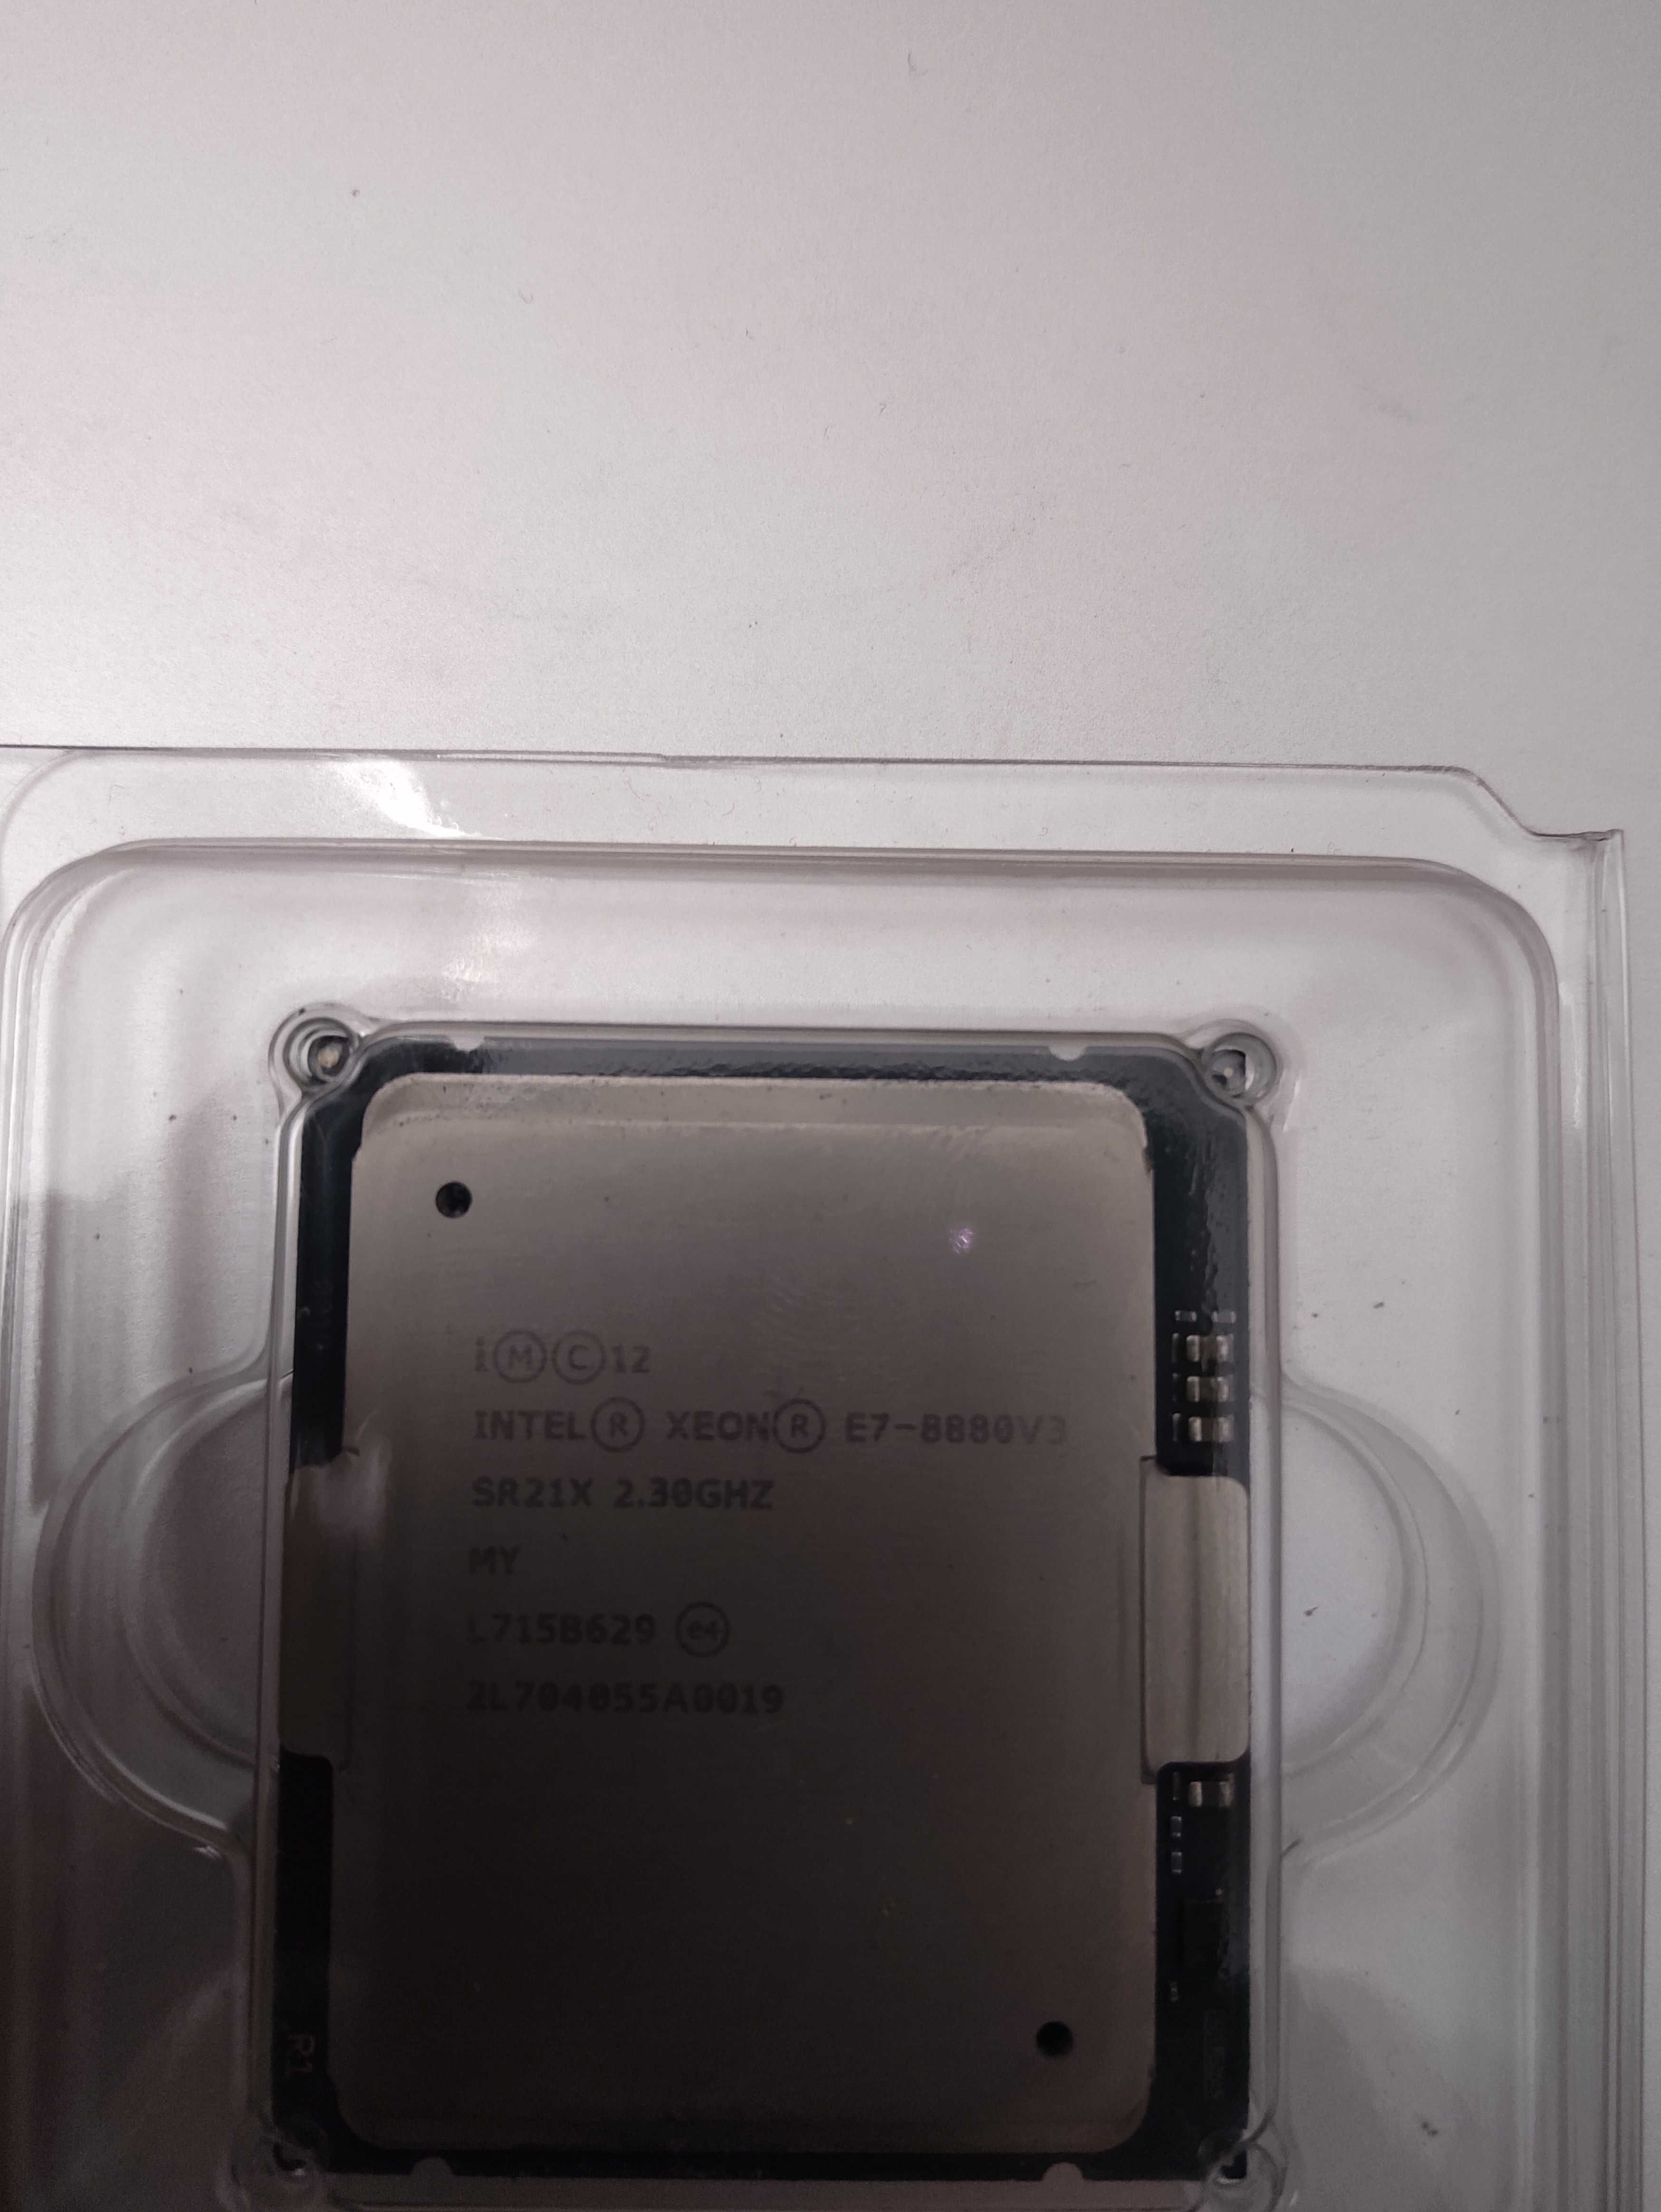 Intel Xeon E7-8880v3